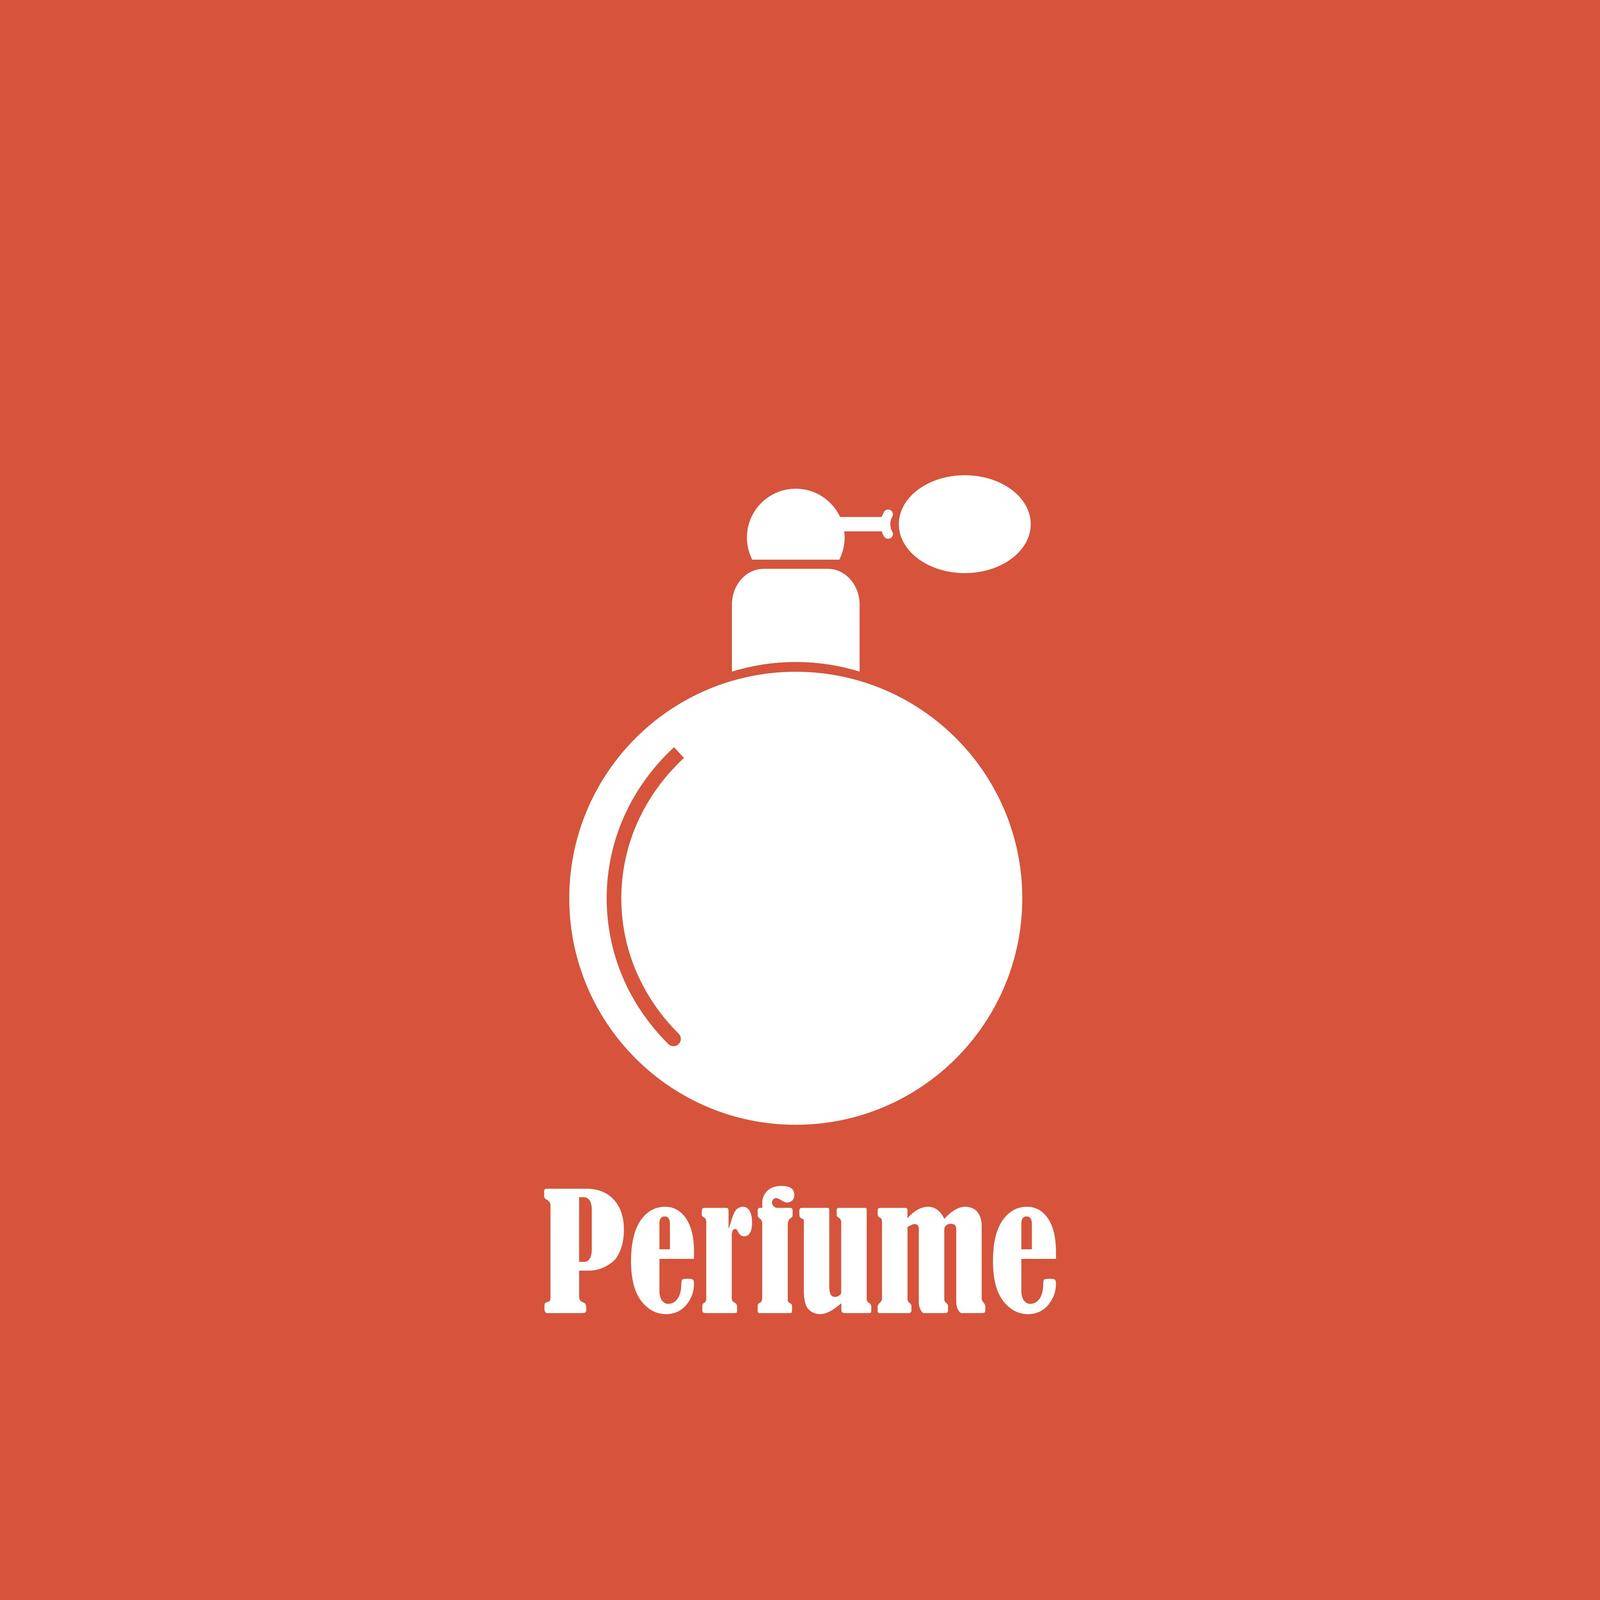 perfume logo by rnking